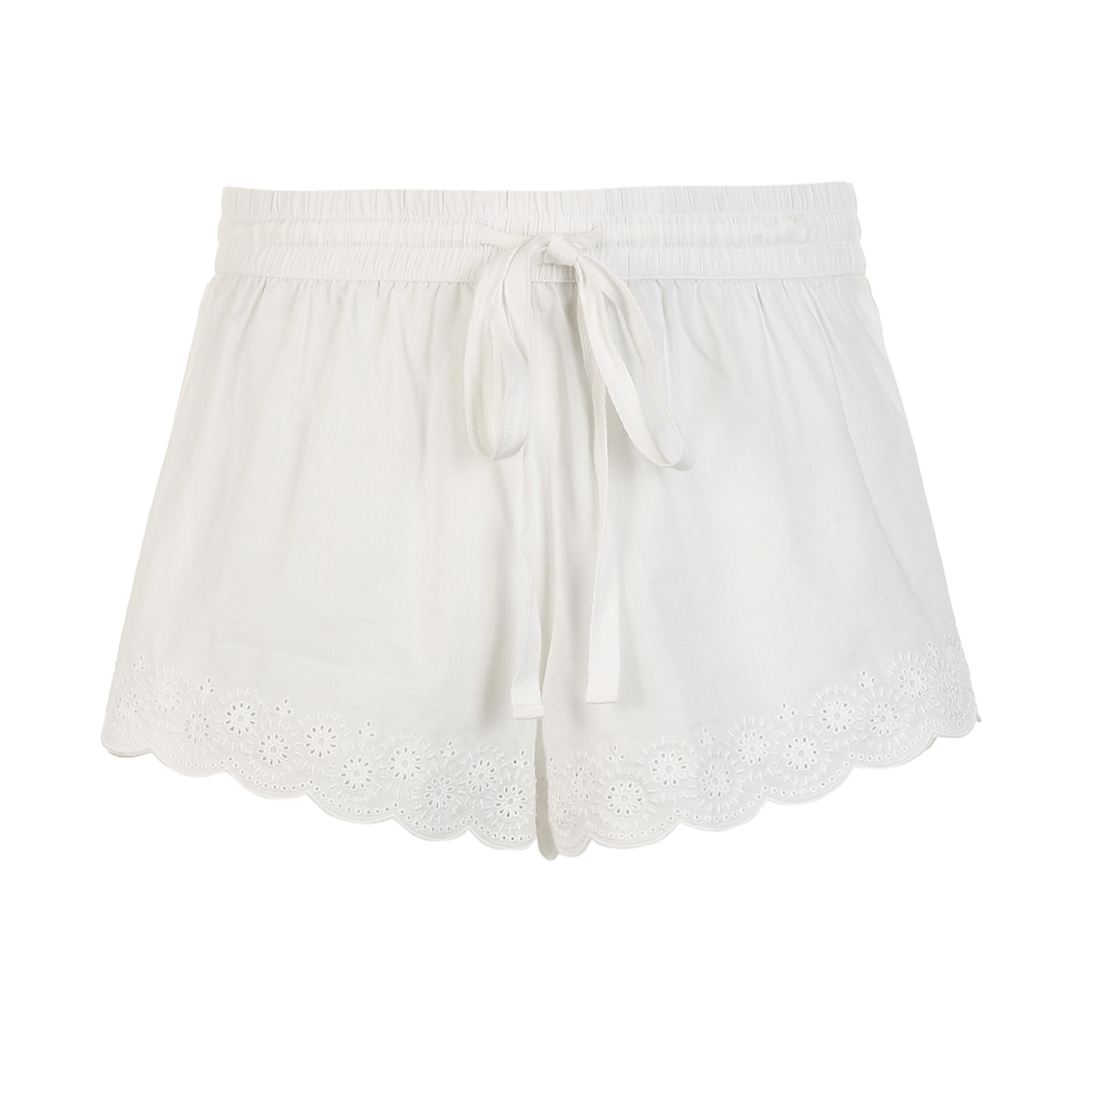 Women's Spring/Summer Cotton Loose Shorts